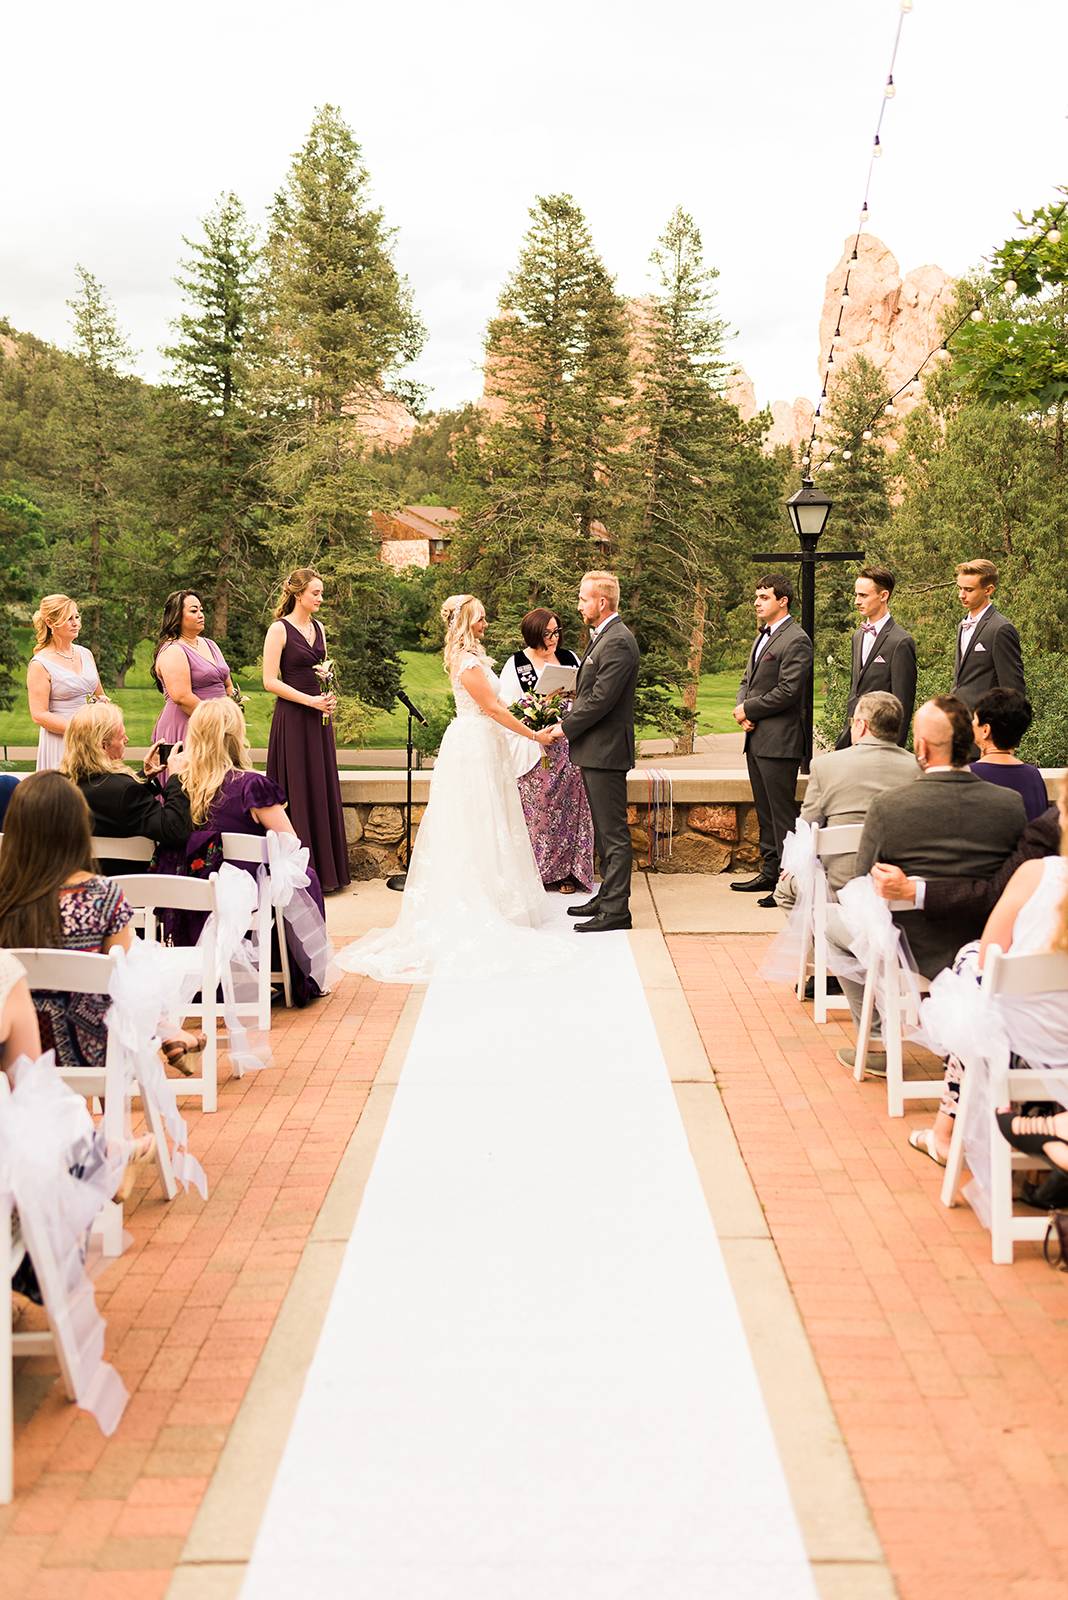 Glen Eyrie Castle Wedding in Colorado Springs